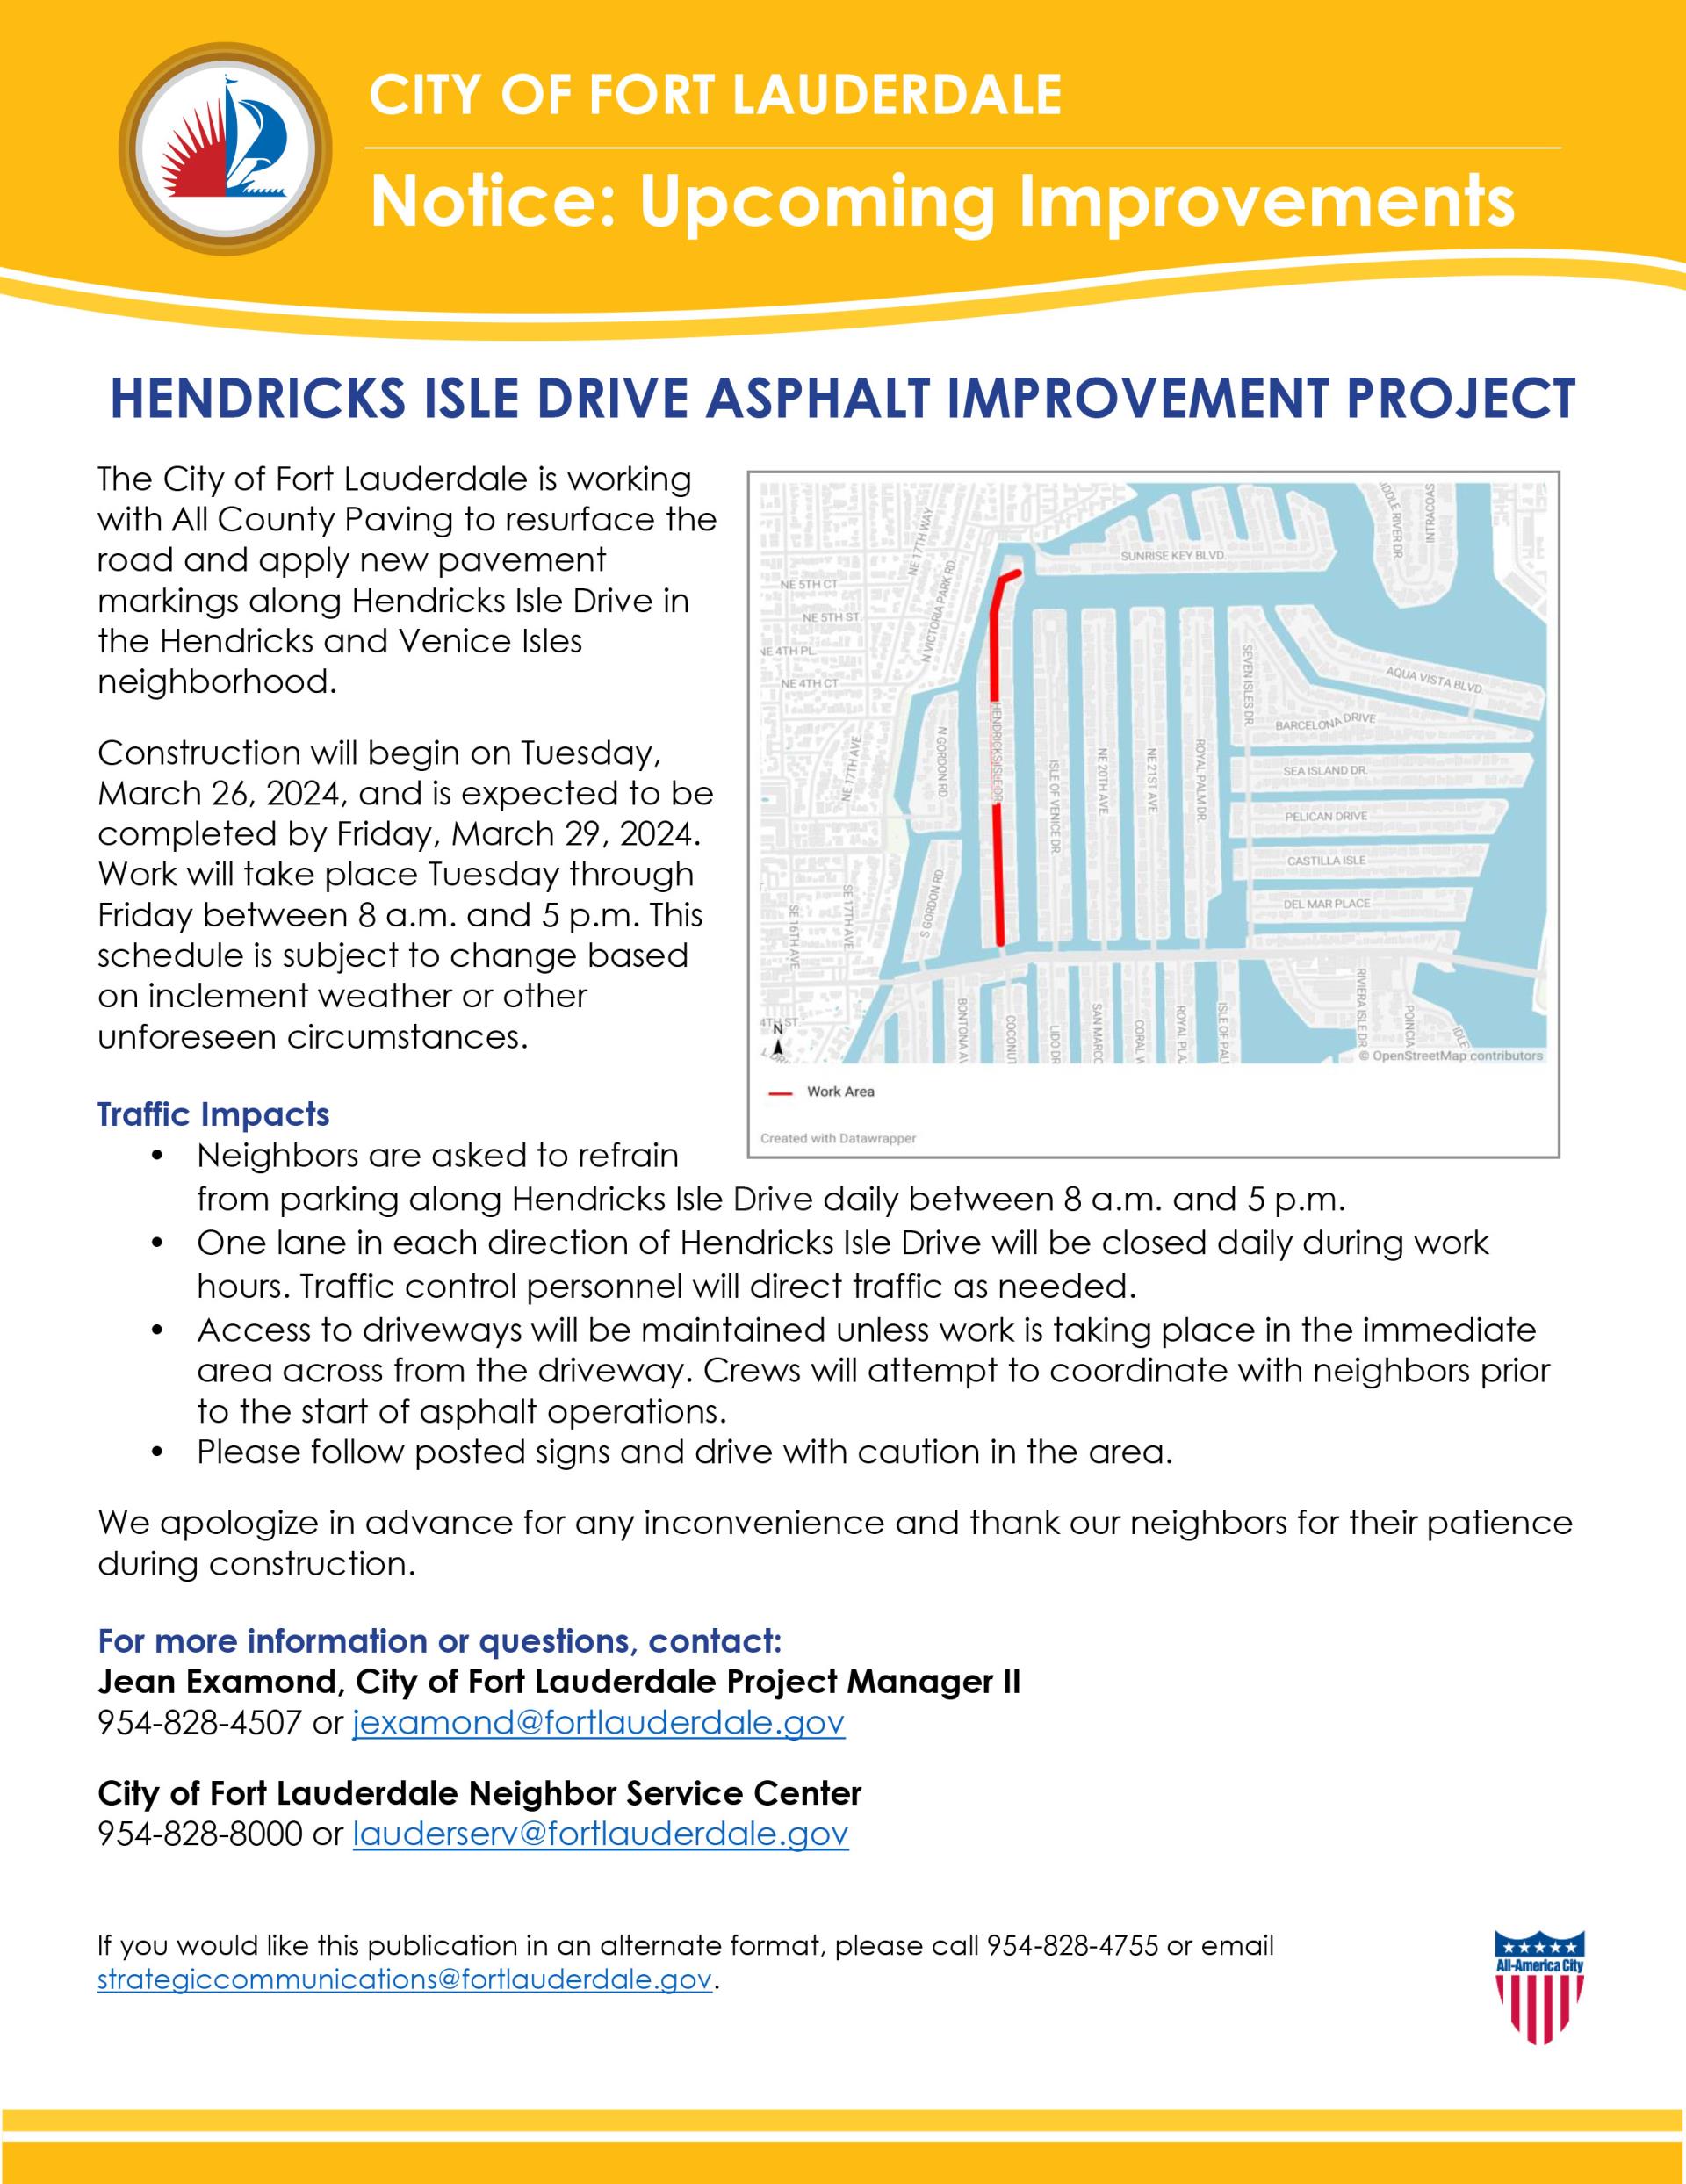 Hendricks-Isle-Drive-Asphalt-Improvement-Project